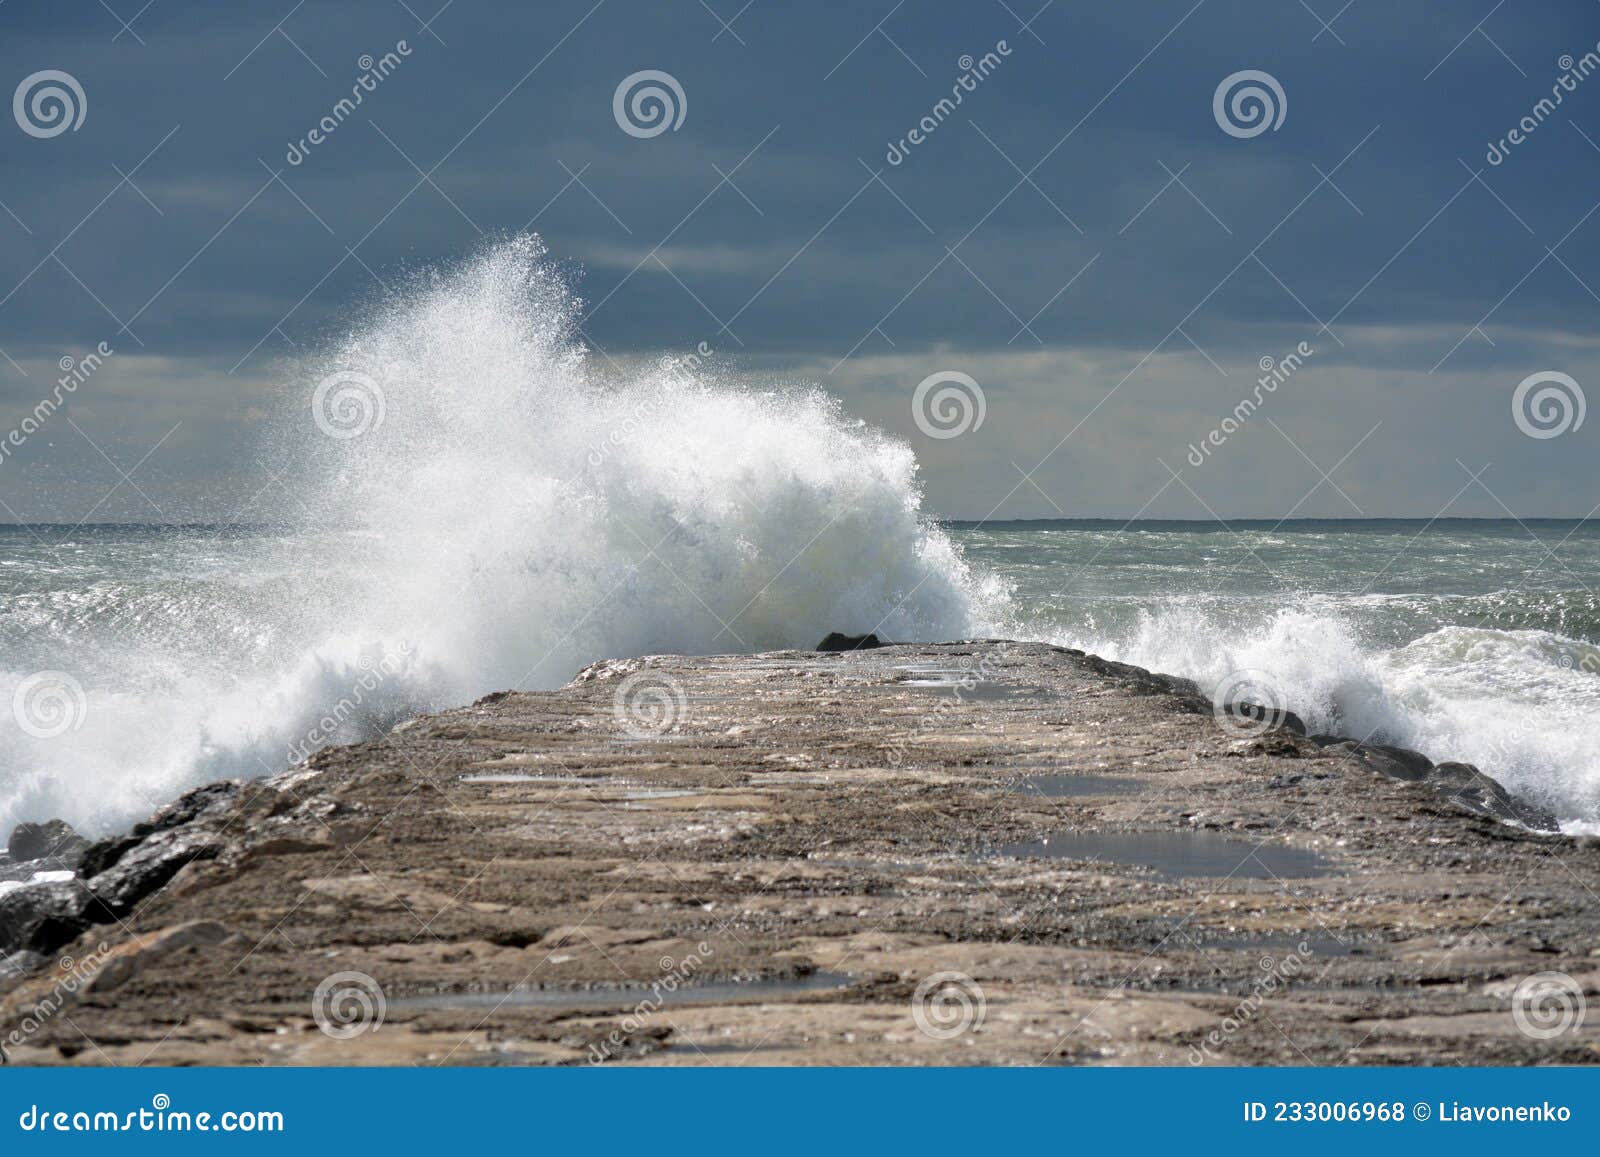 waves in the atlantic ocean beach. portugal almada. costa de caparica.